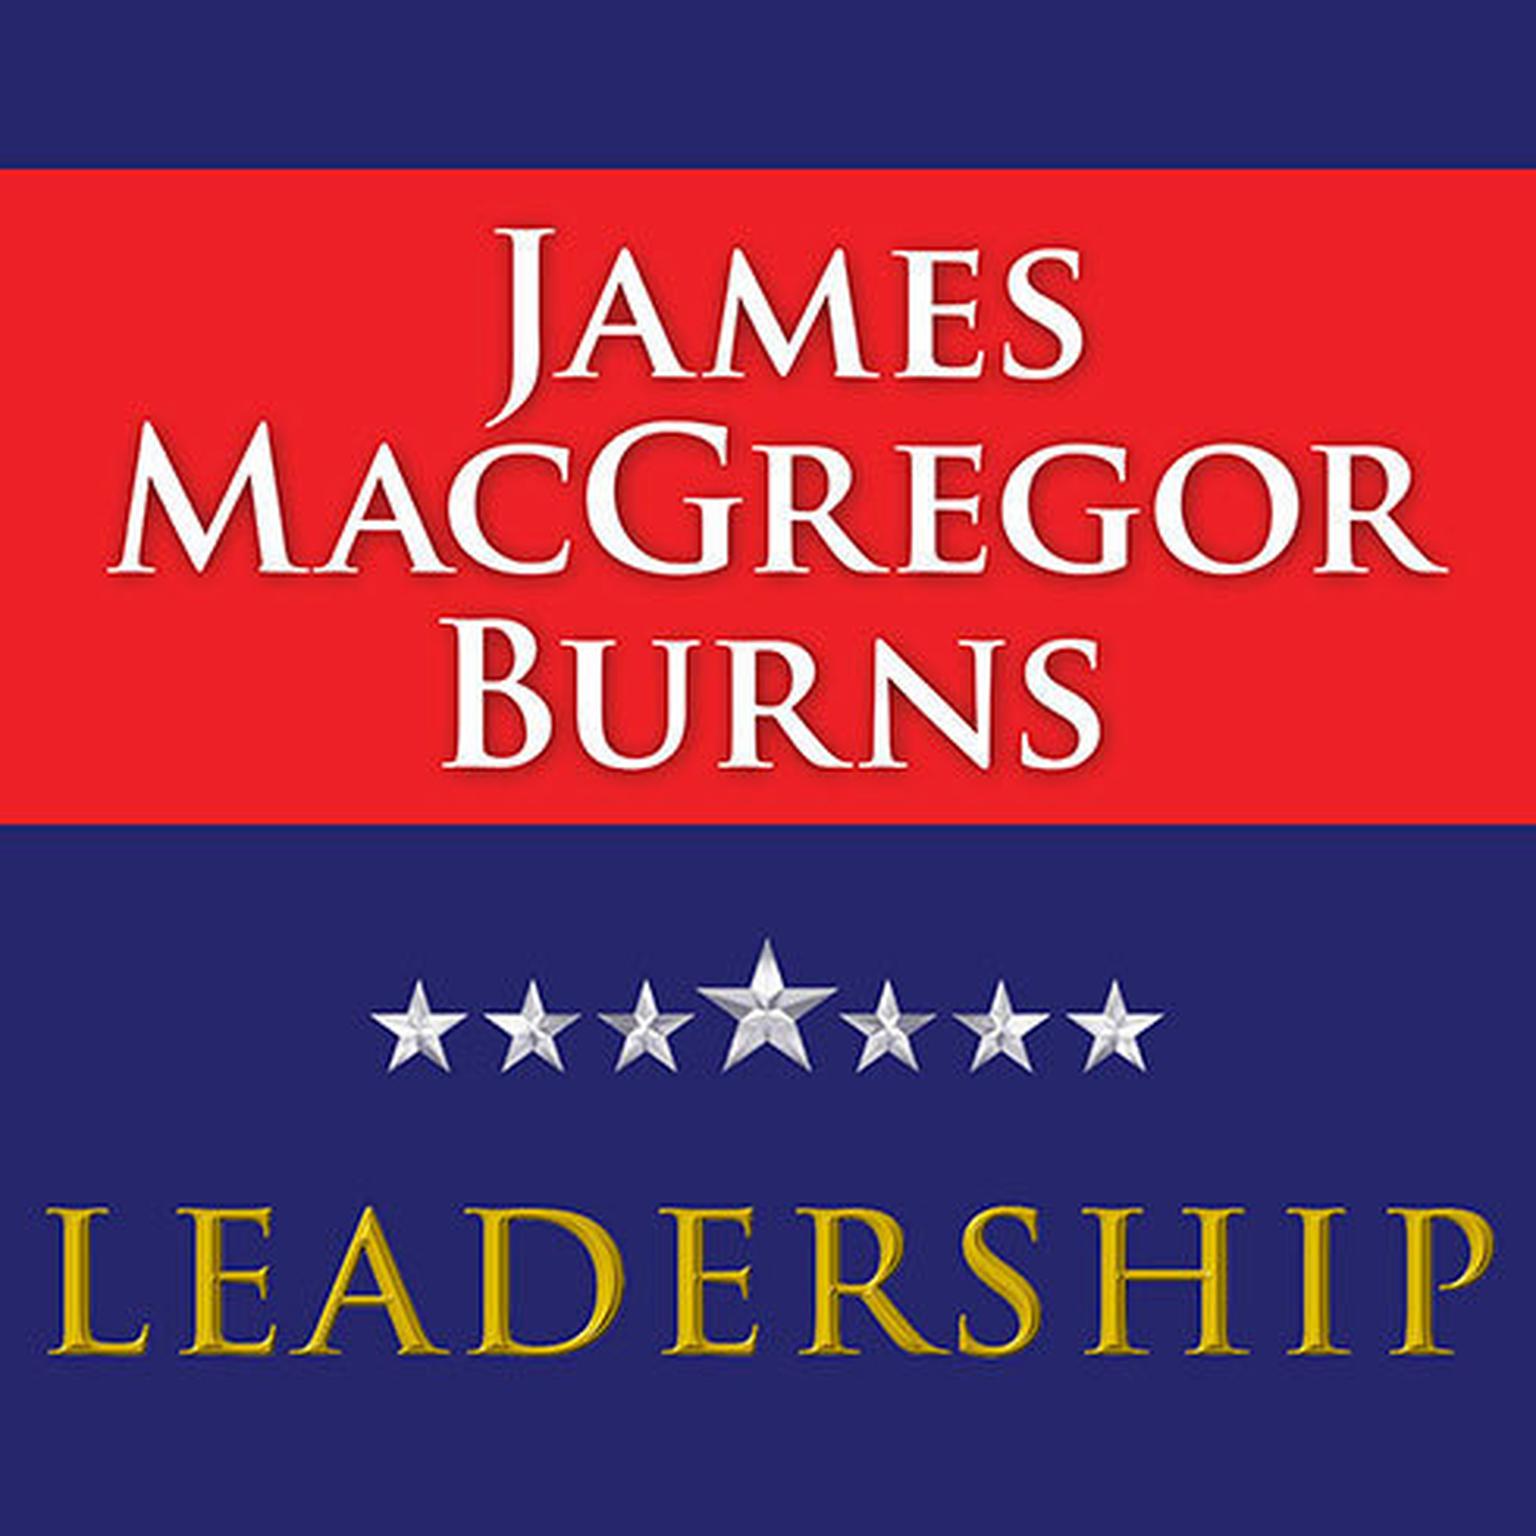 Leadership Audiobook, by James MacGregor Burns